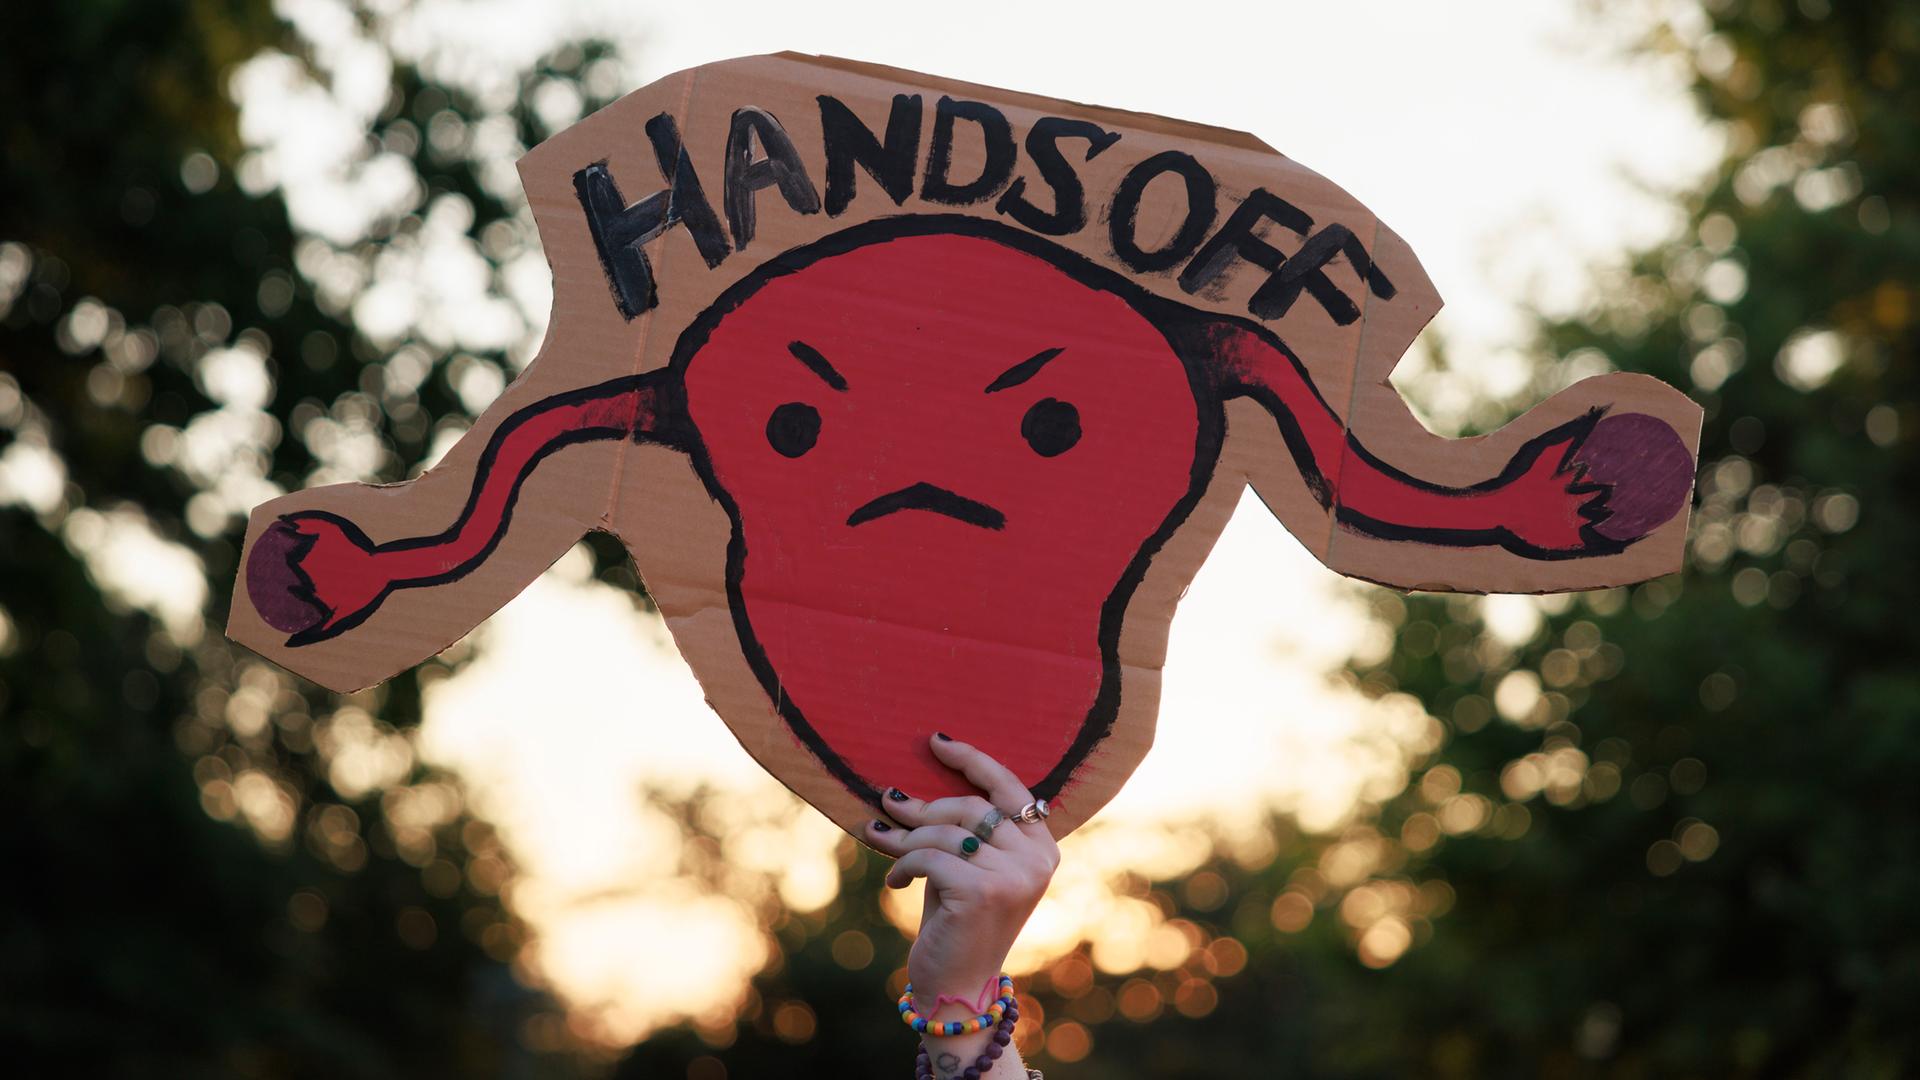 "Hands off": Plakat gegen Abtreibungsverbote.